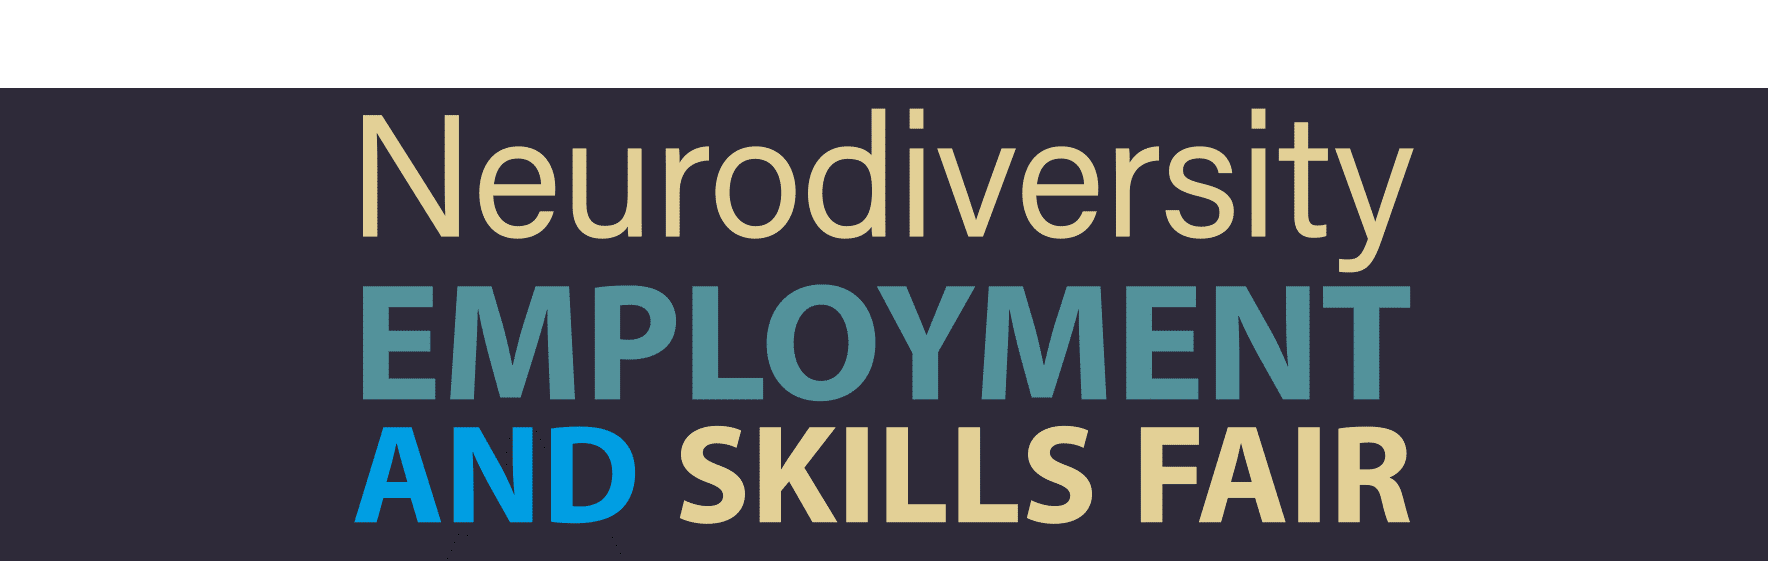 neurodiversity-employment-and-skills-fair-2020-banner.gif